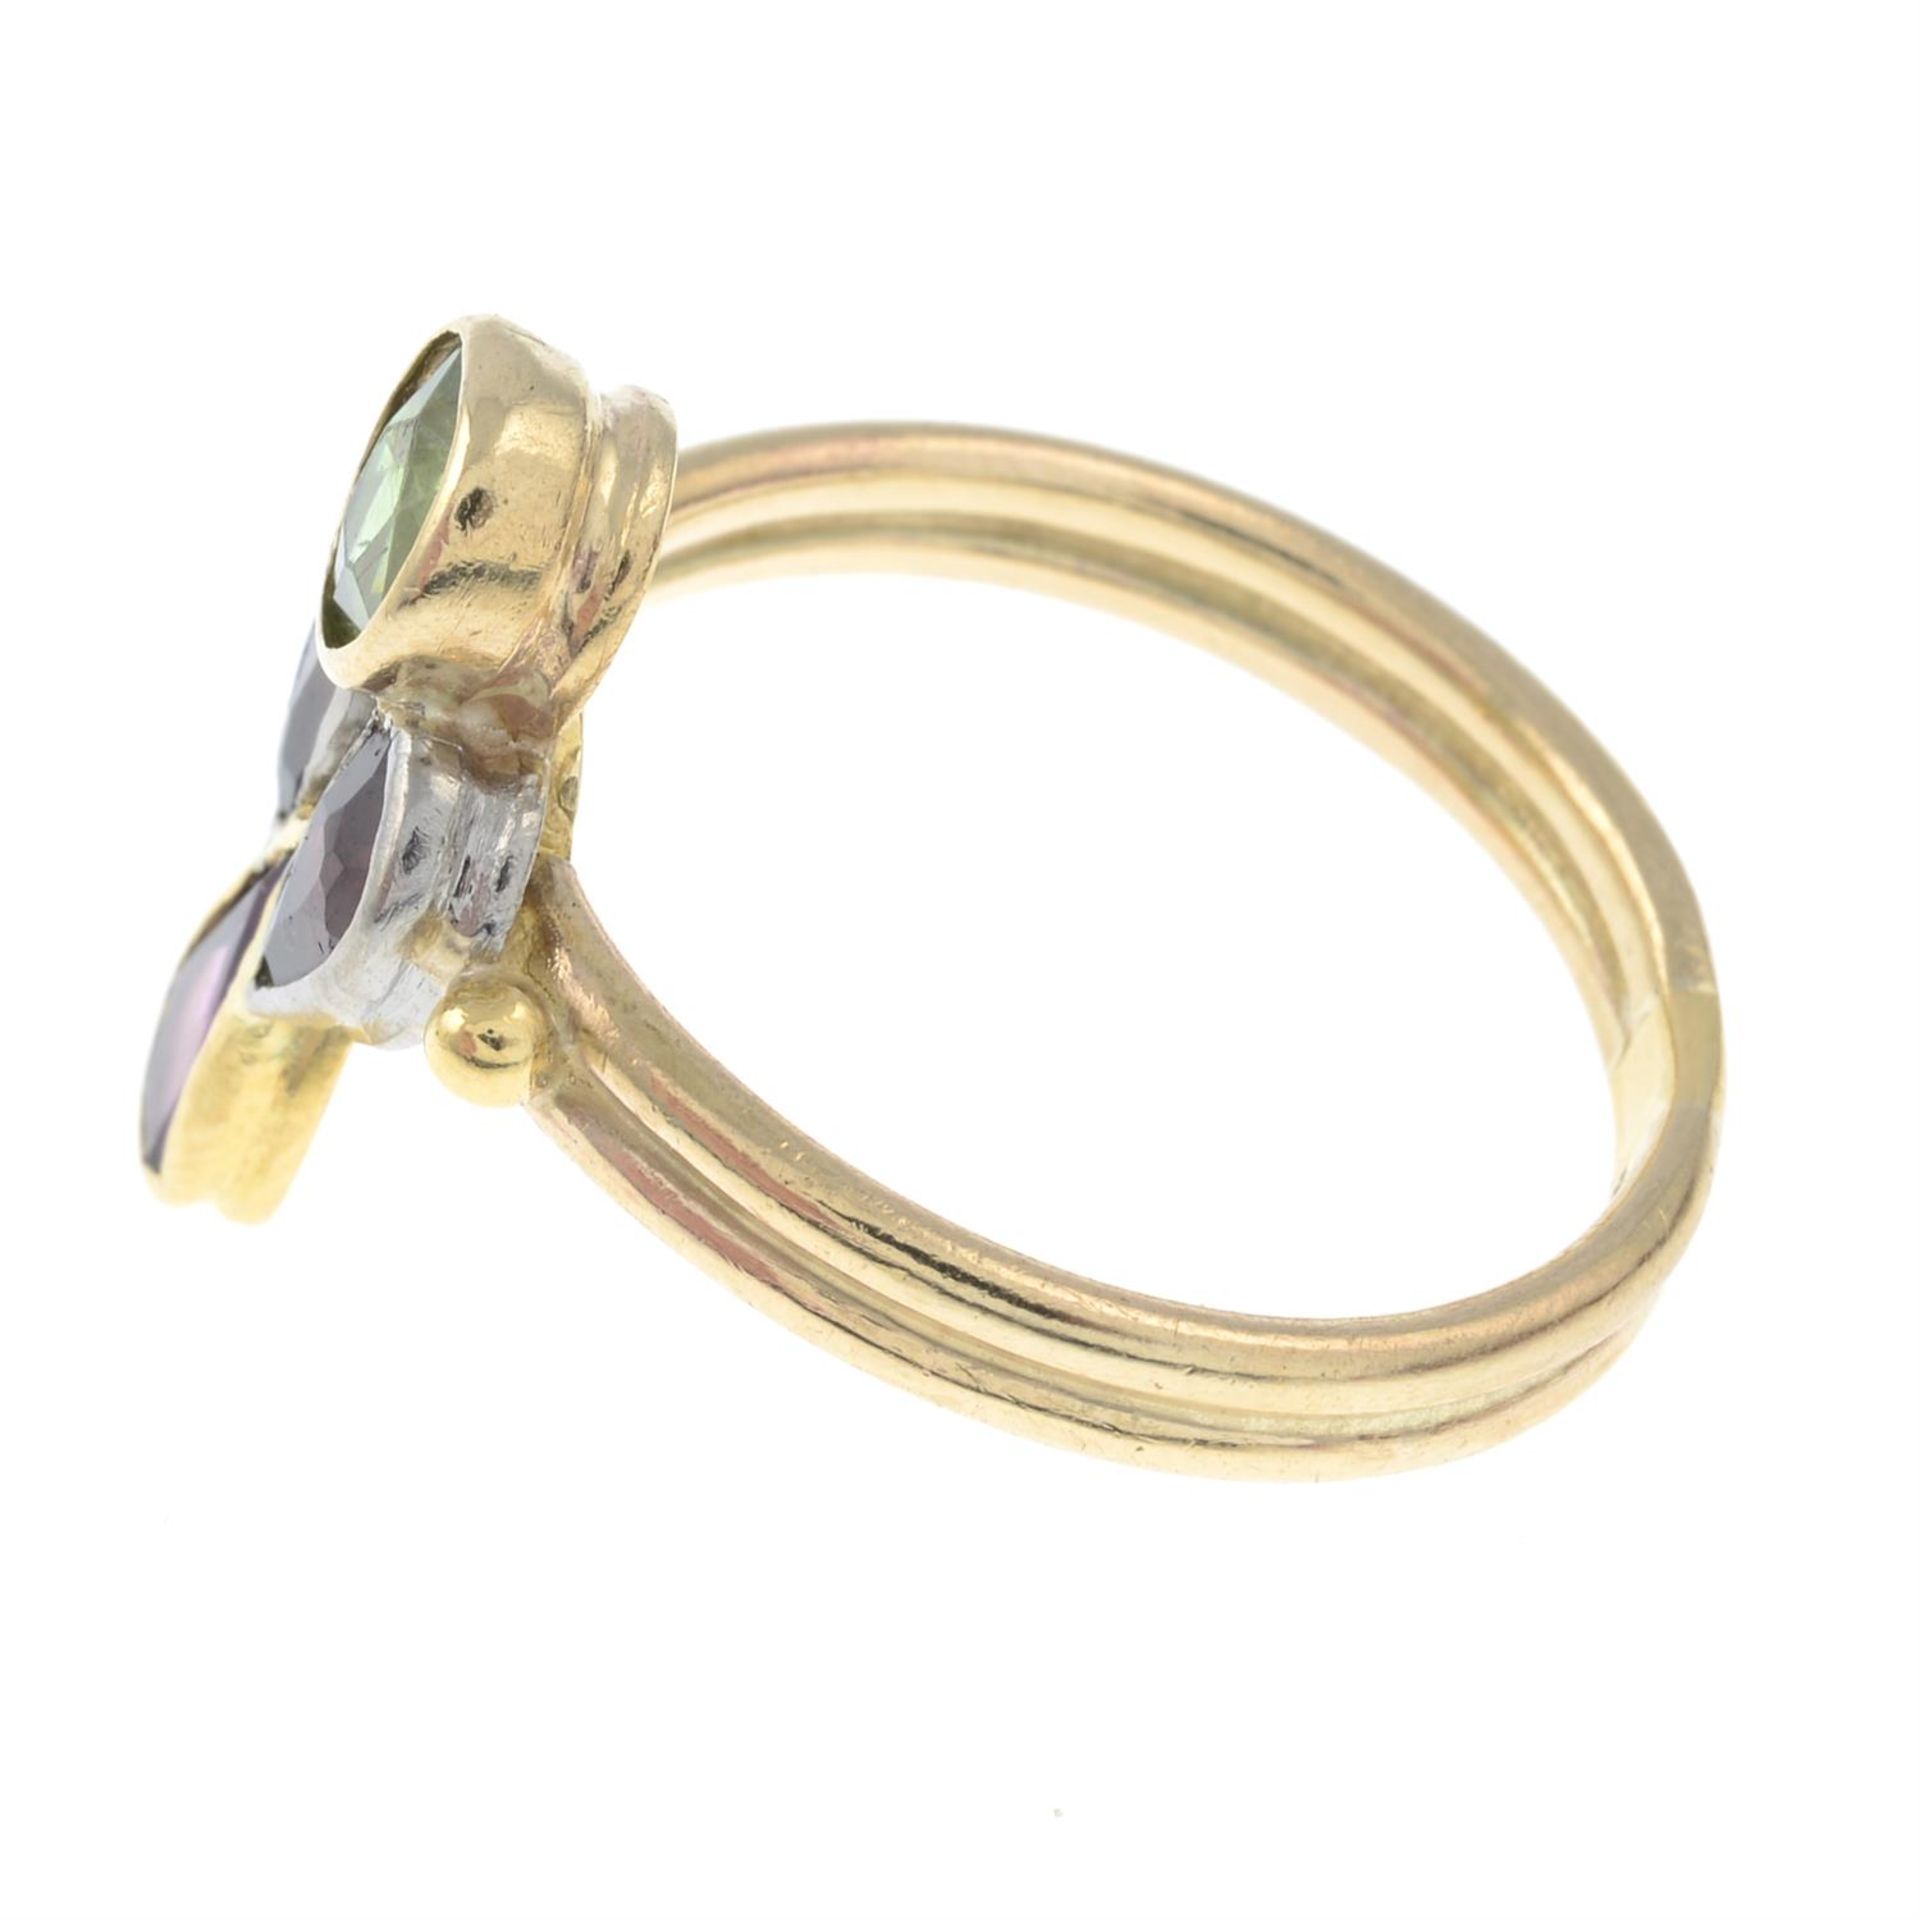 A vari-hue garnet ring. - Image 2 of 3